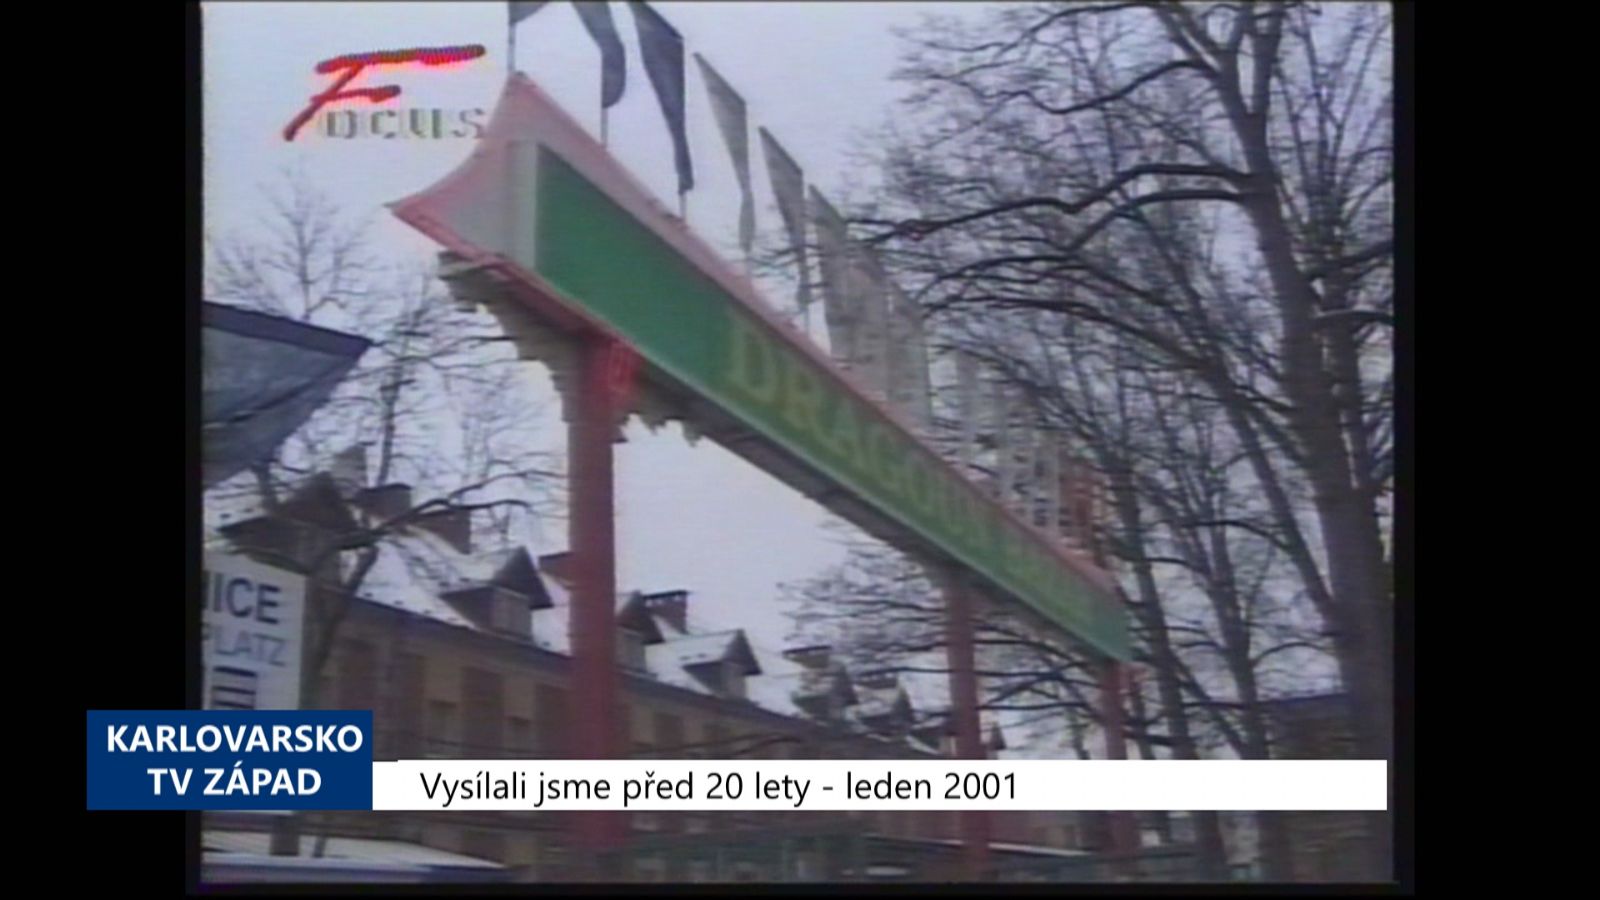 2001 – Cheb: Tržnice Dragoun má nového nájemce (TV Západ)